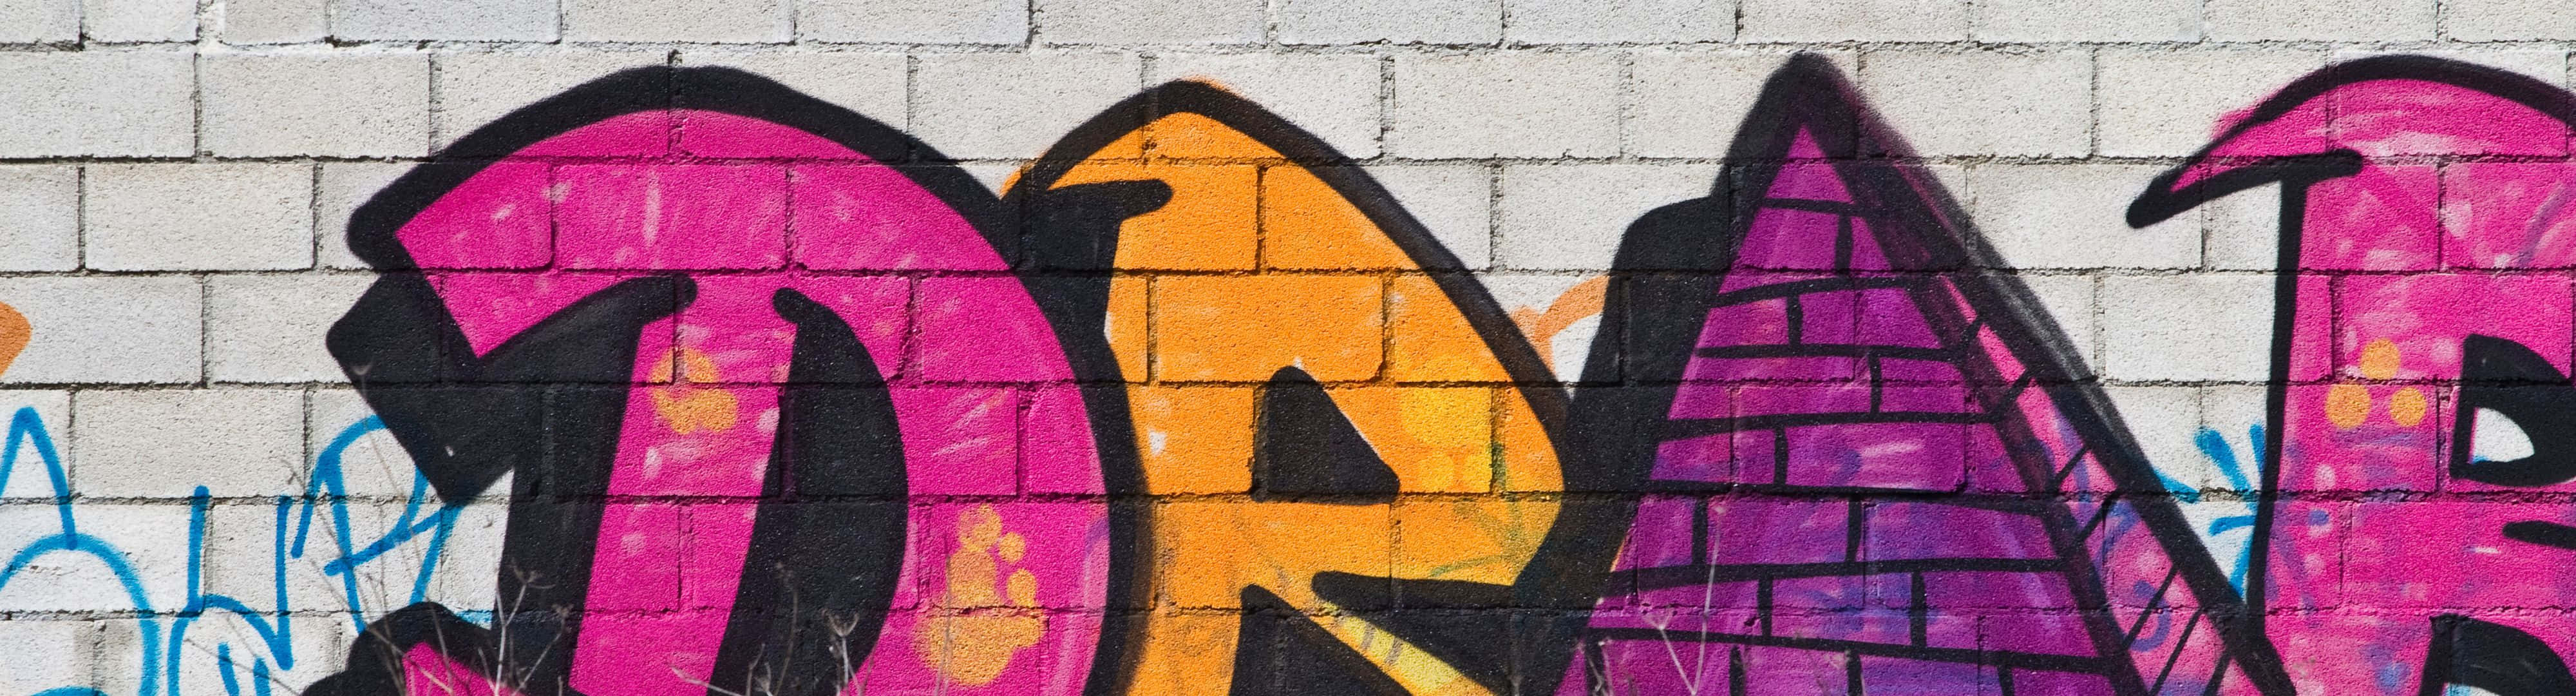 Get creative with Hip Hop Graffiti Wallpaper